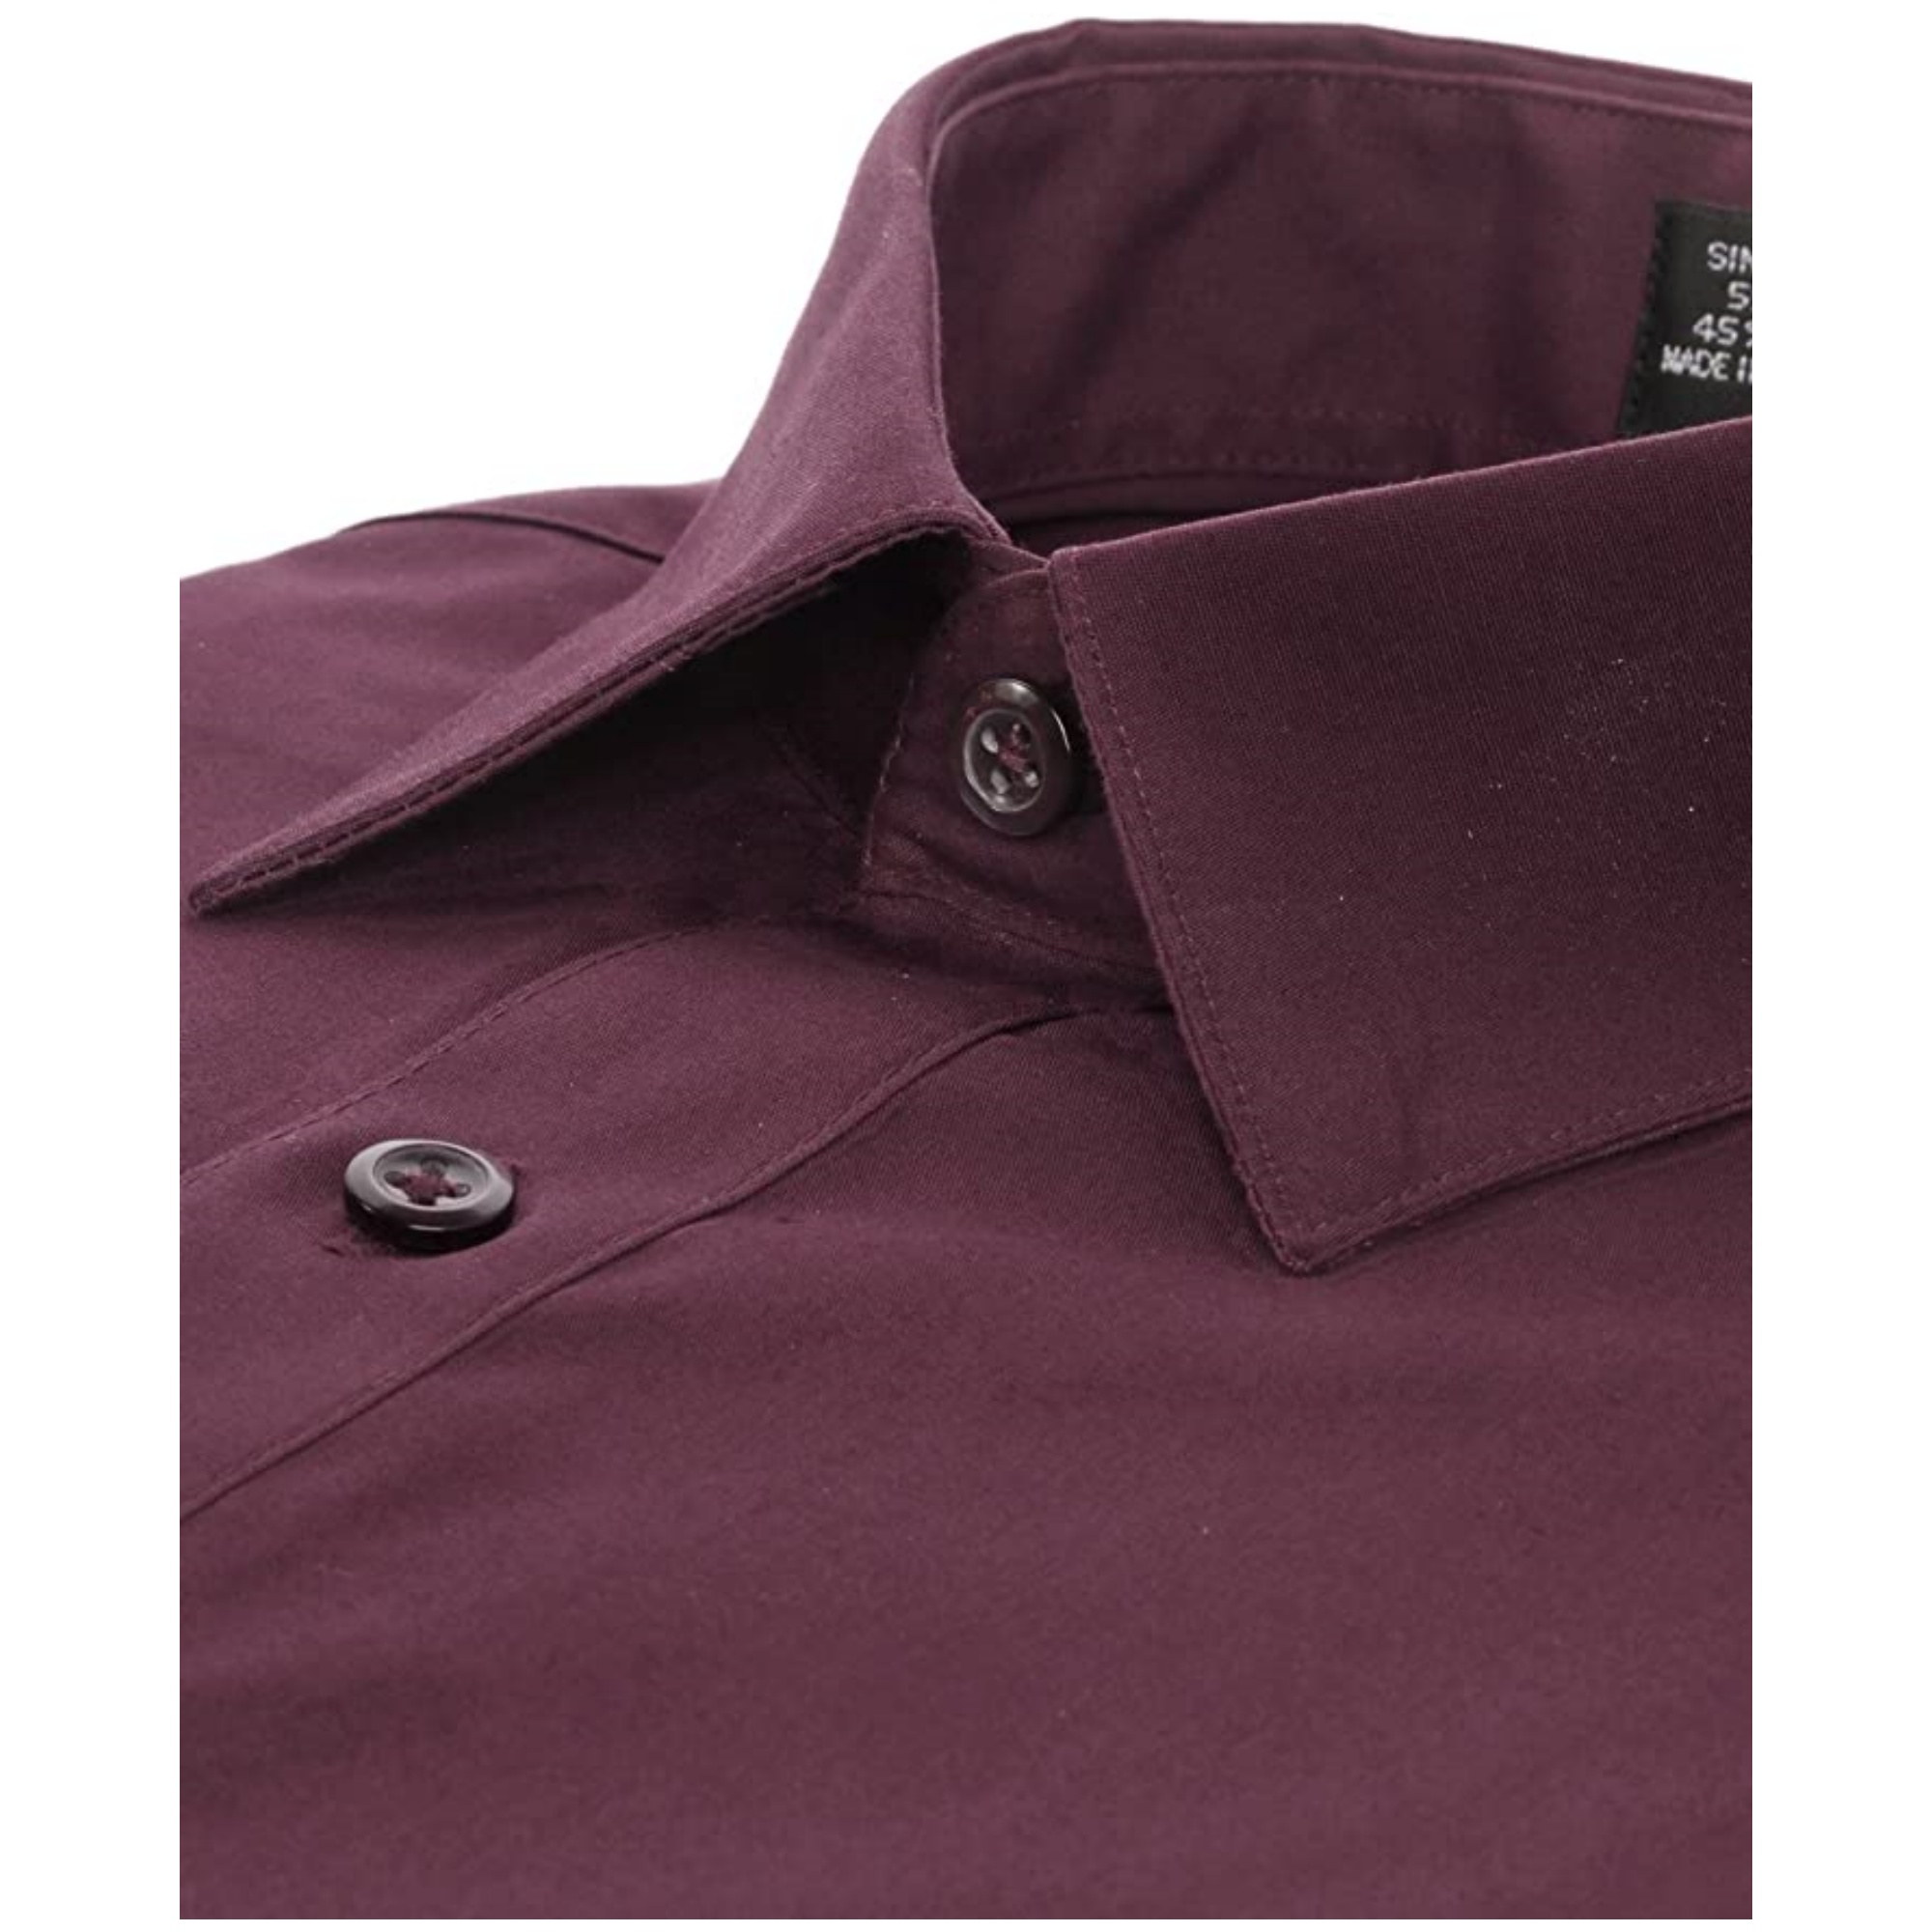 TM Lewin Dress Shirt Mens Size 16 35 Slim Fit Burgundy Pinstriped Button Up